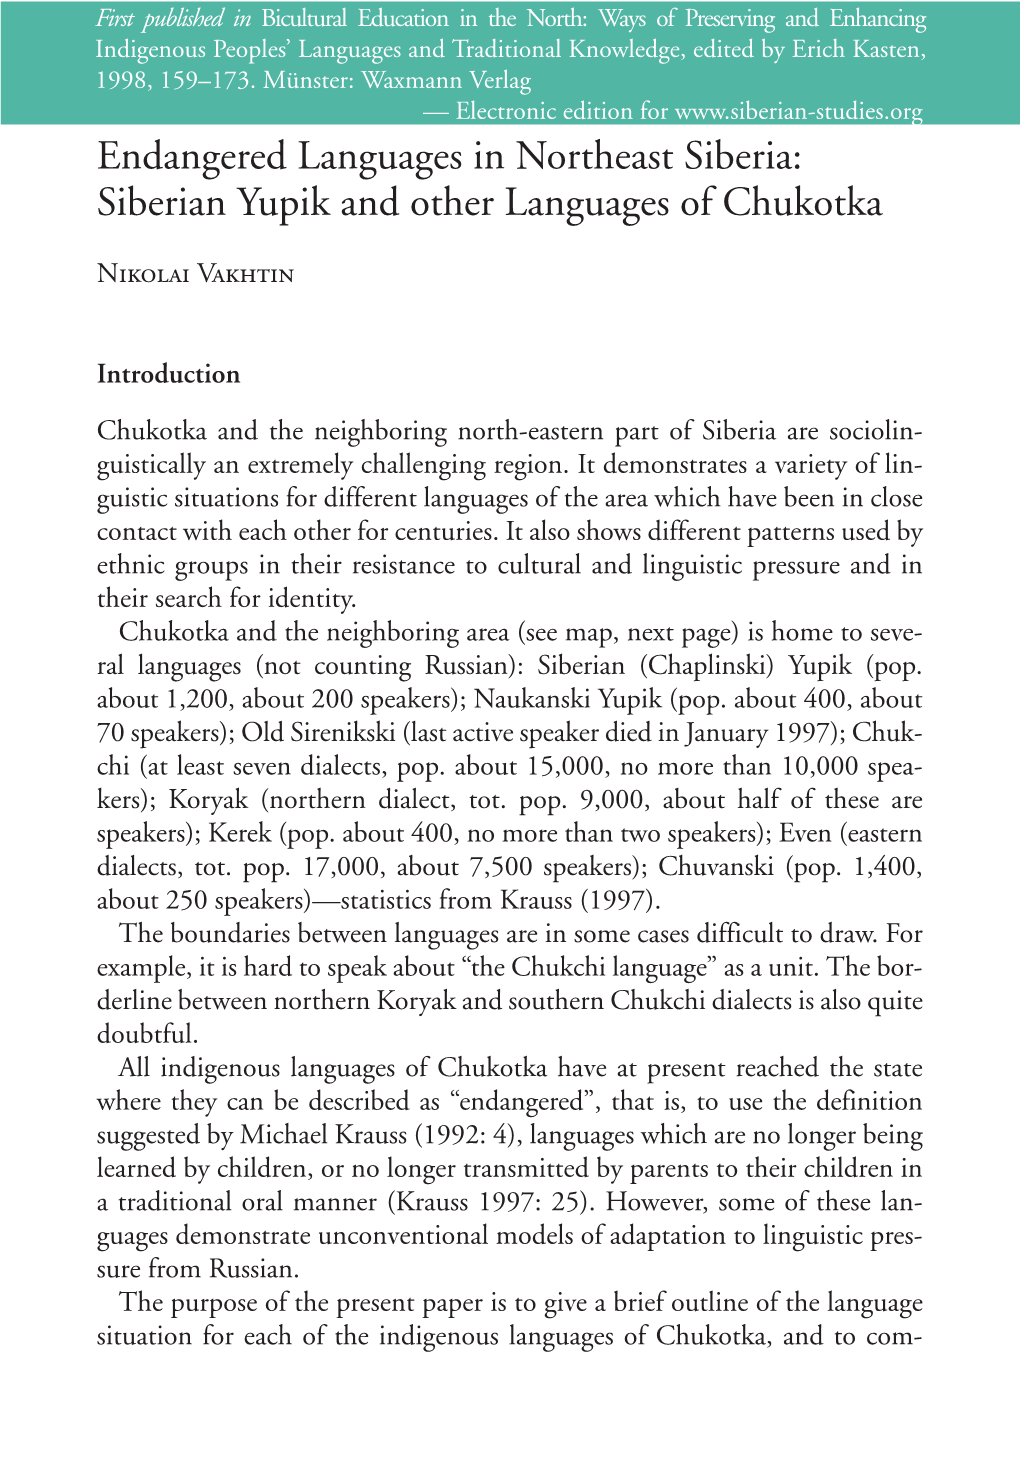 Endangered Languages in Northeast Siberia: Siberian Yupik and Other Languages of Chukotka